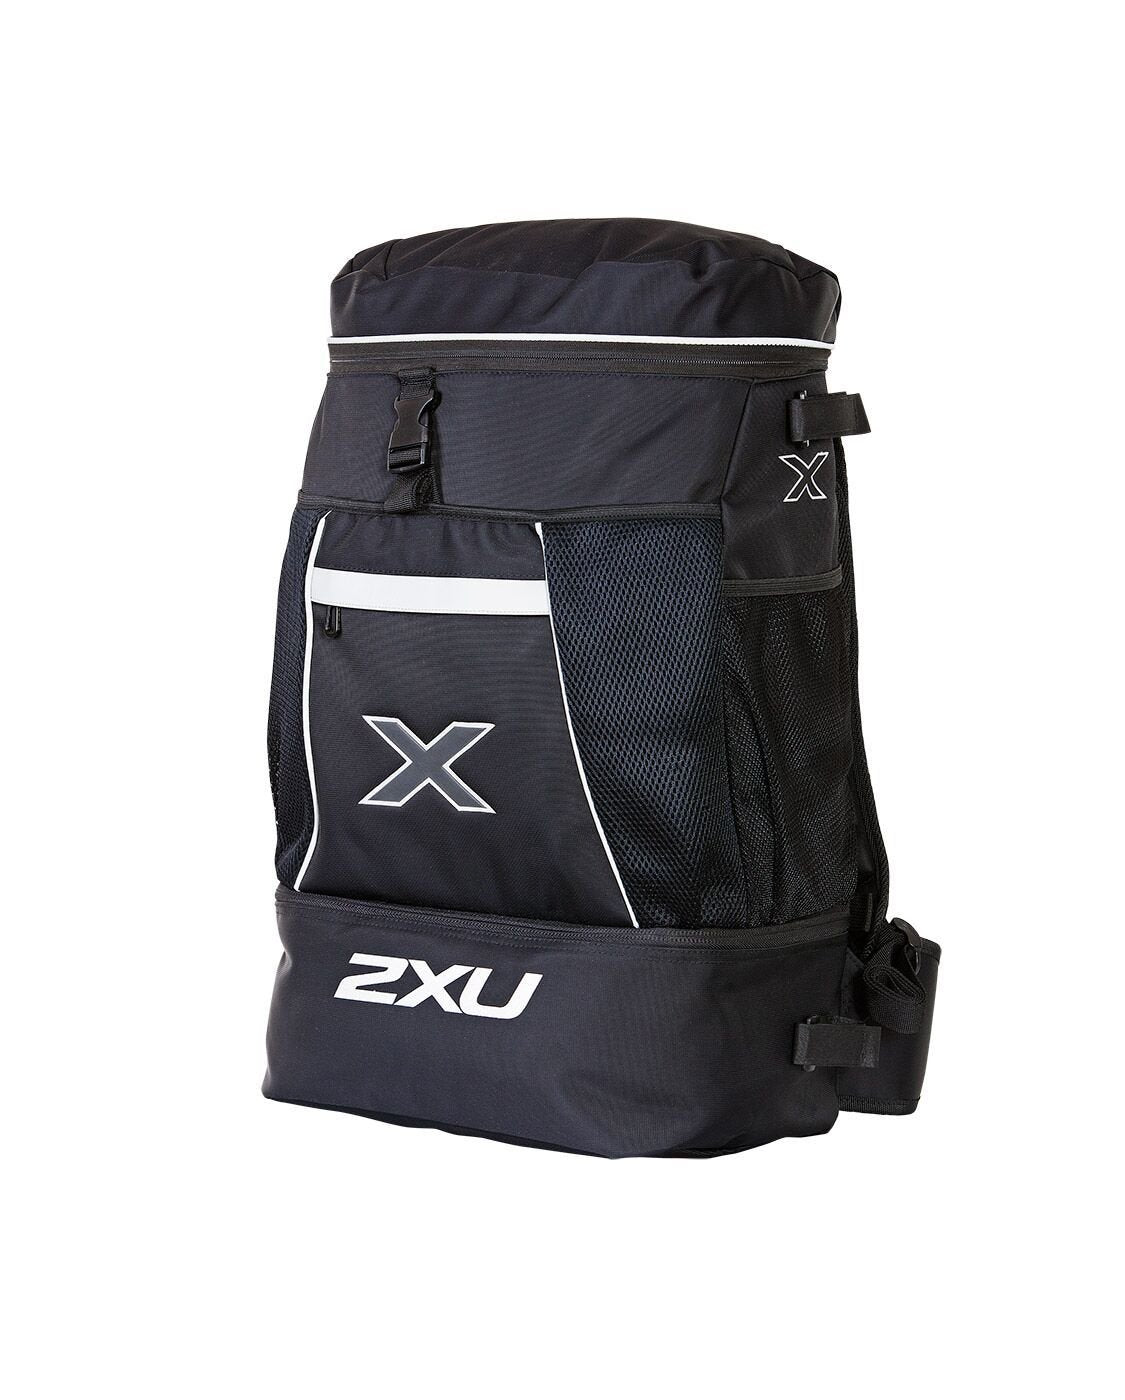 2XU SA - Transition Bag - Black/Black